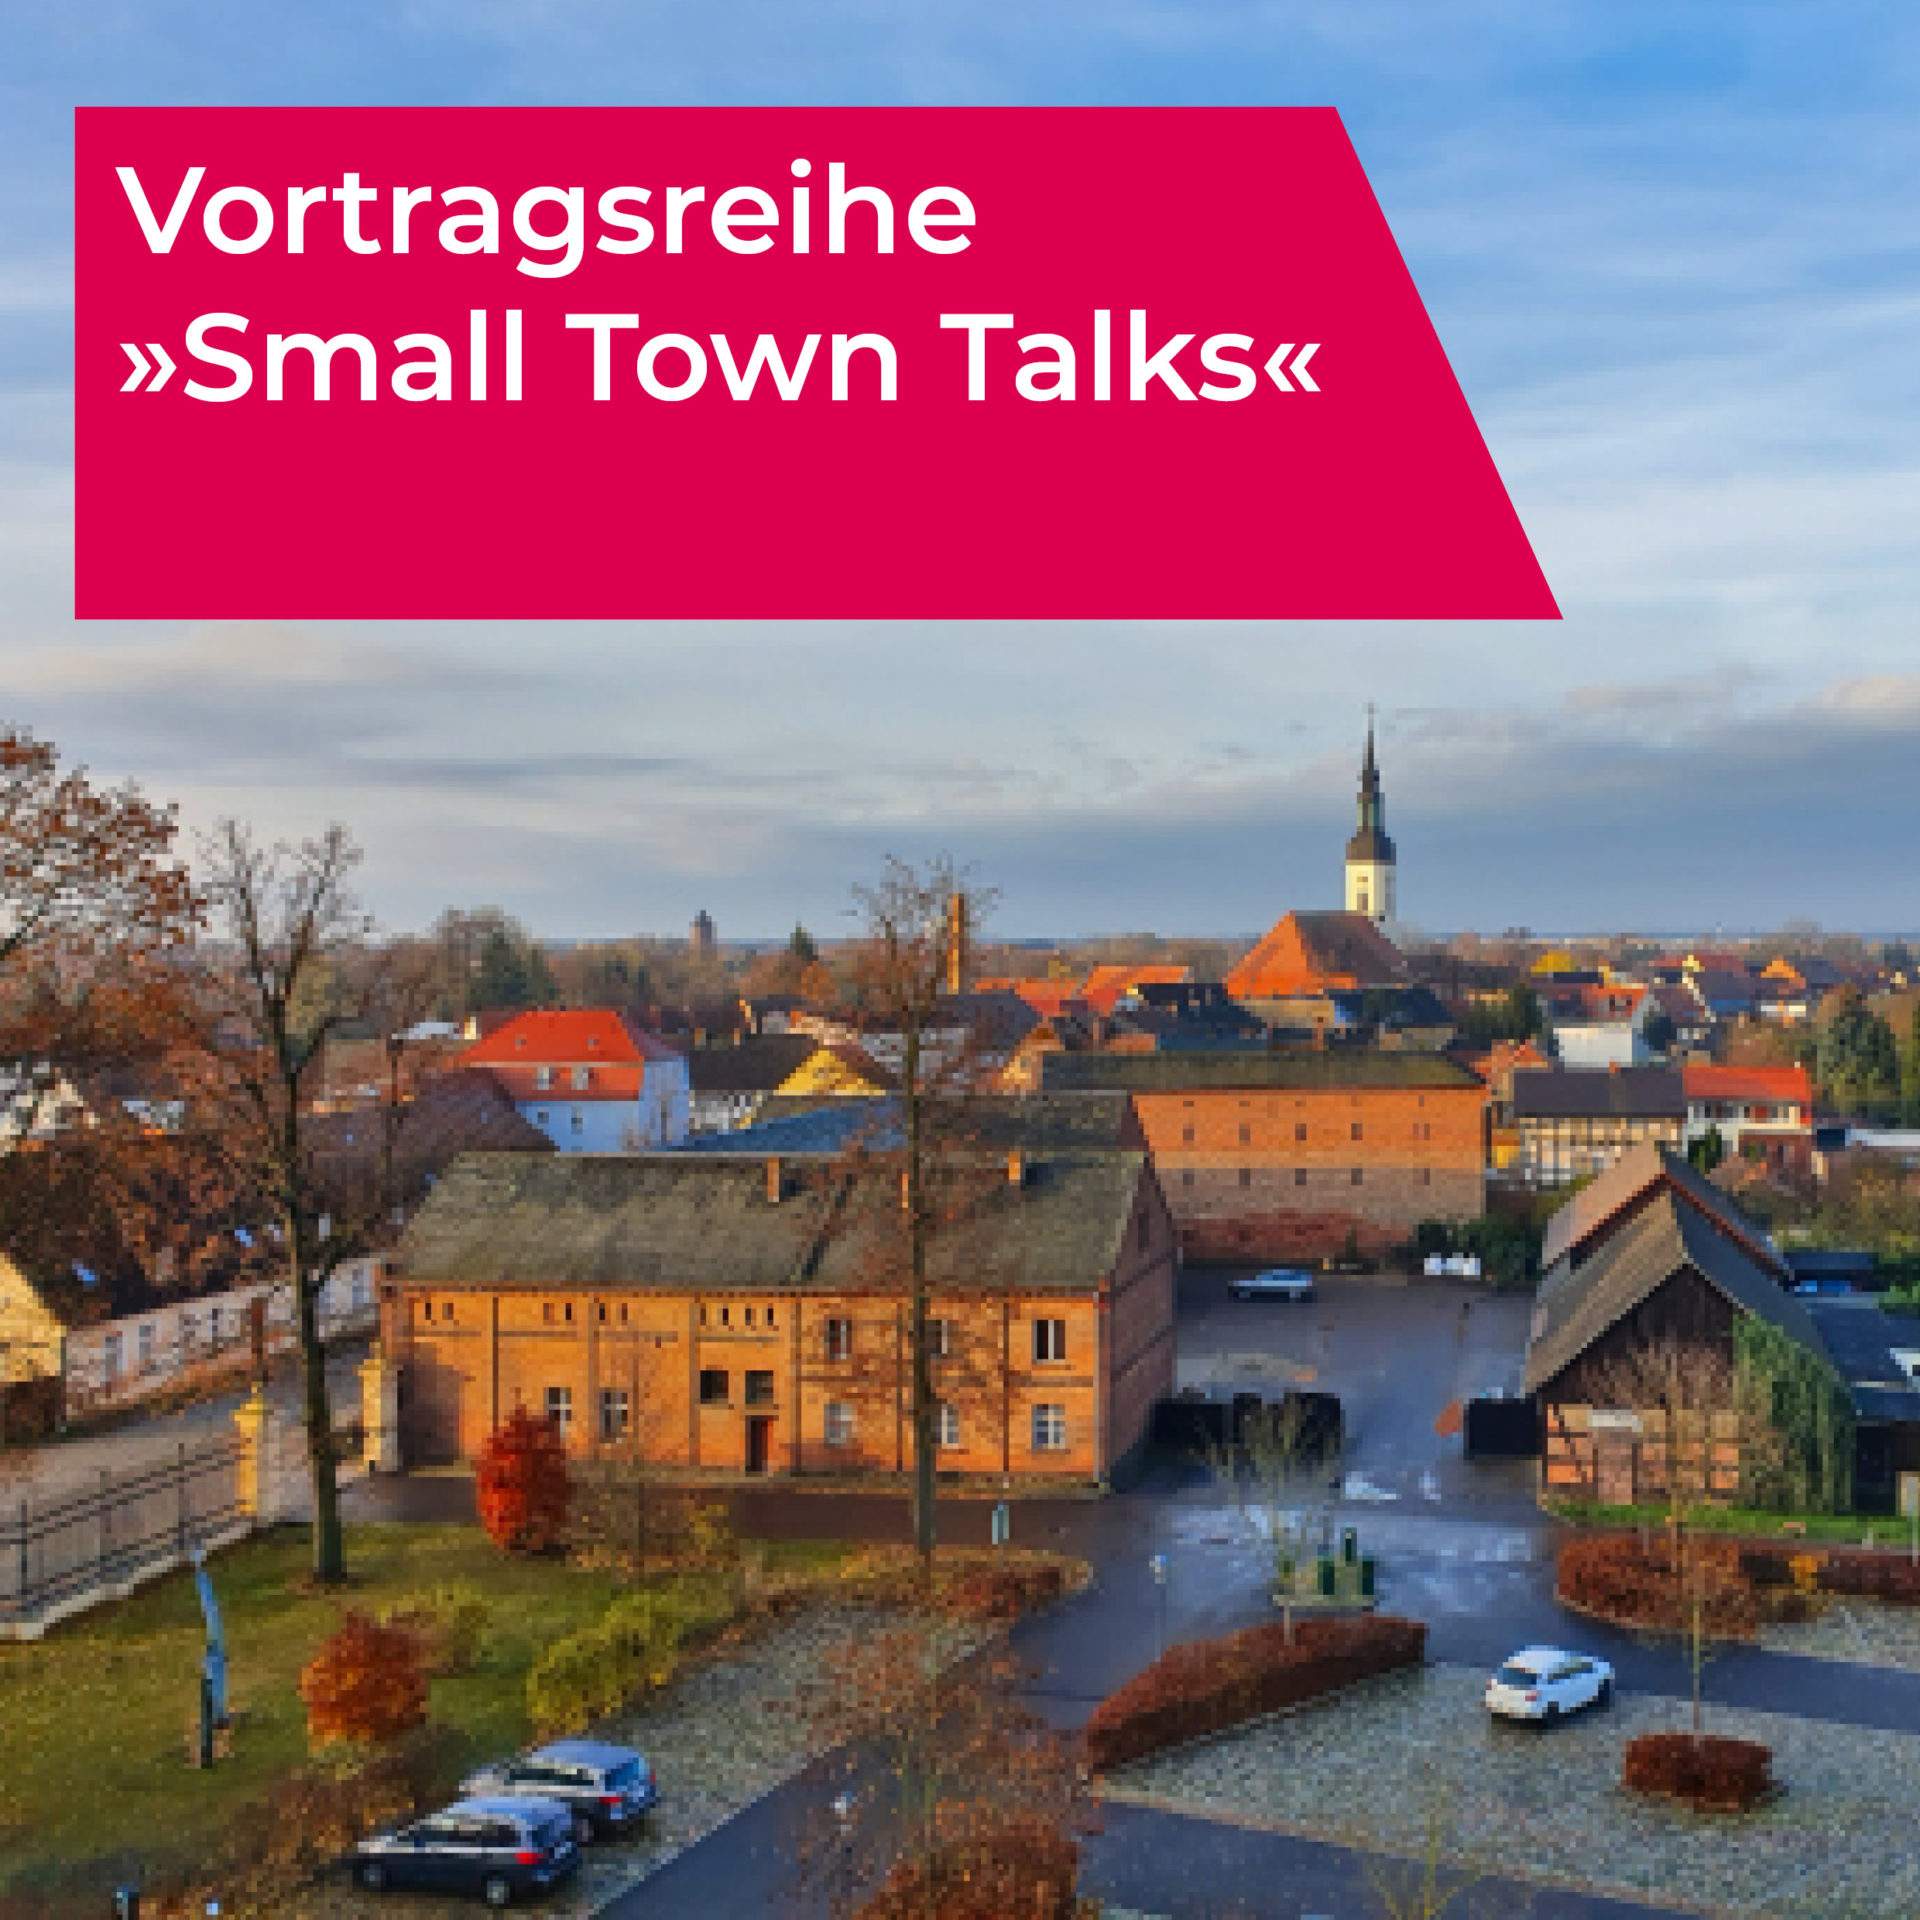 Vortragsreihe "Small Town Talks"